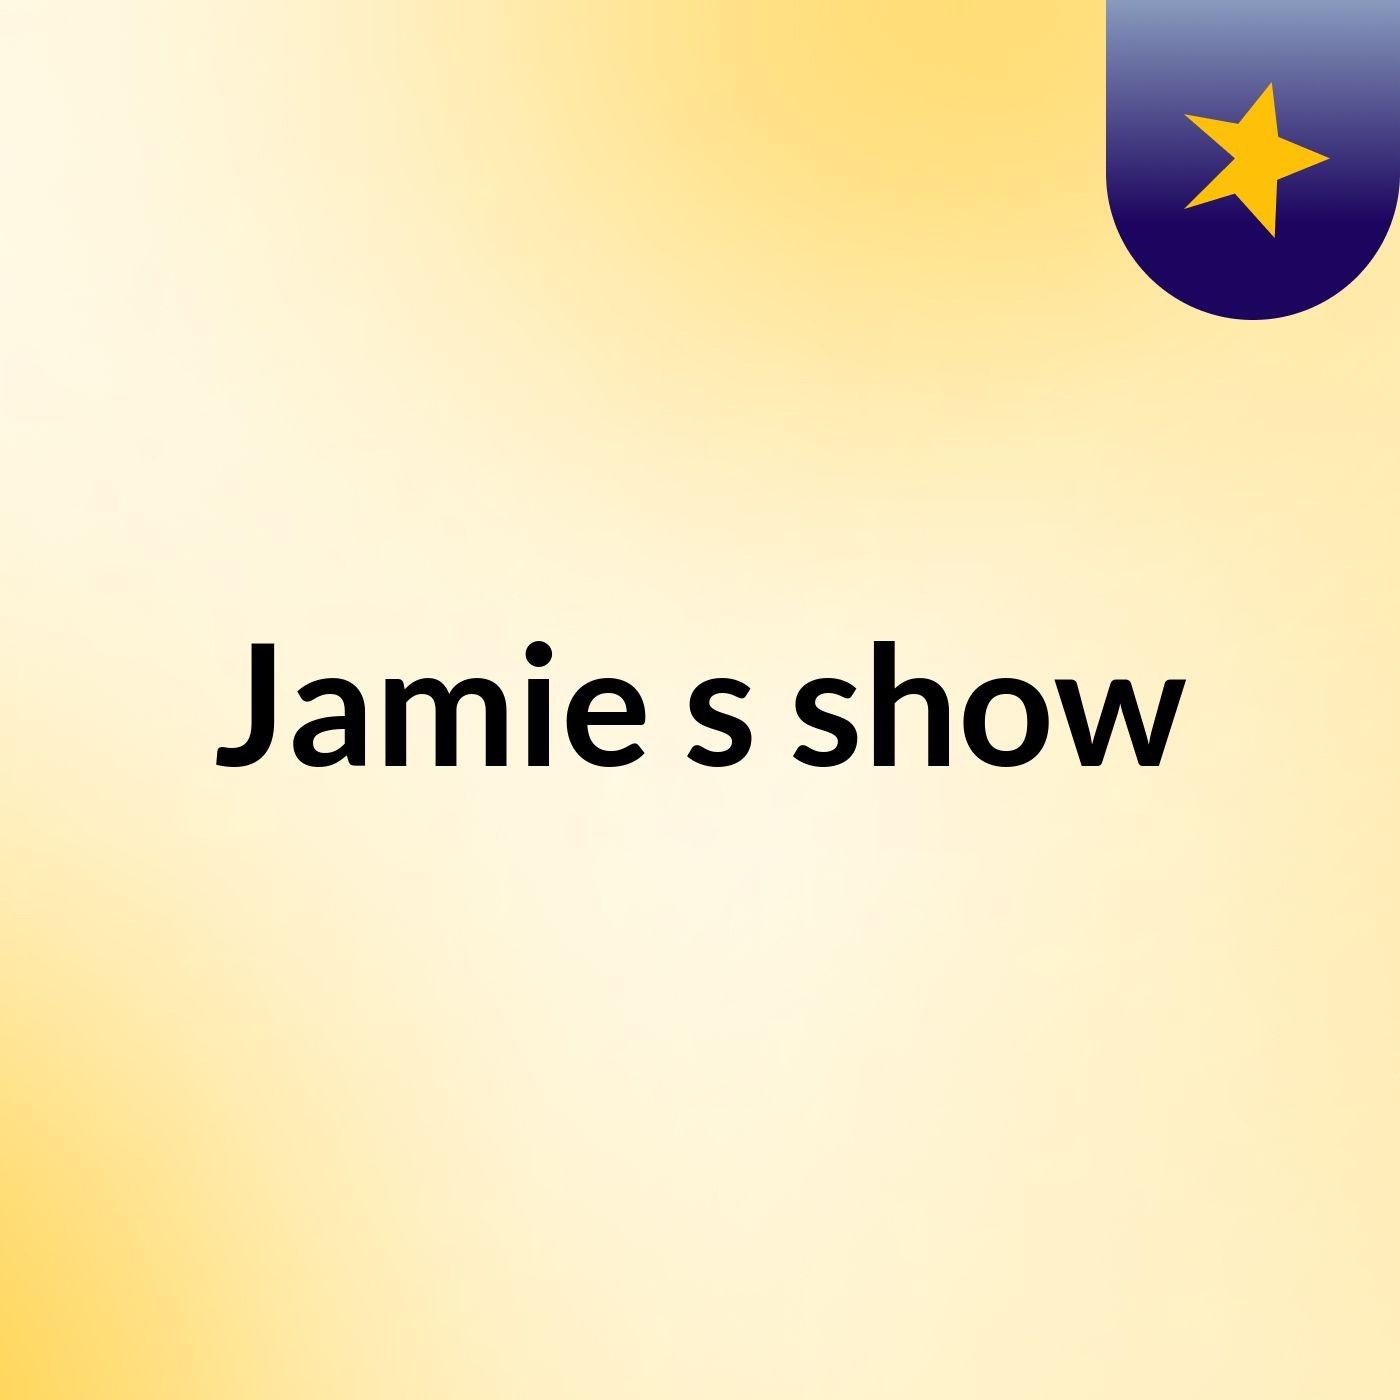 Jamie's show